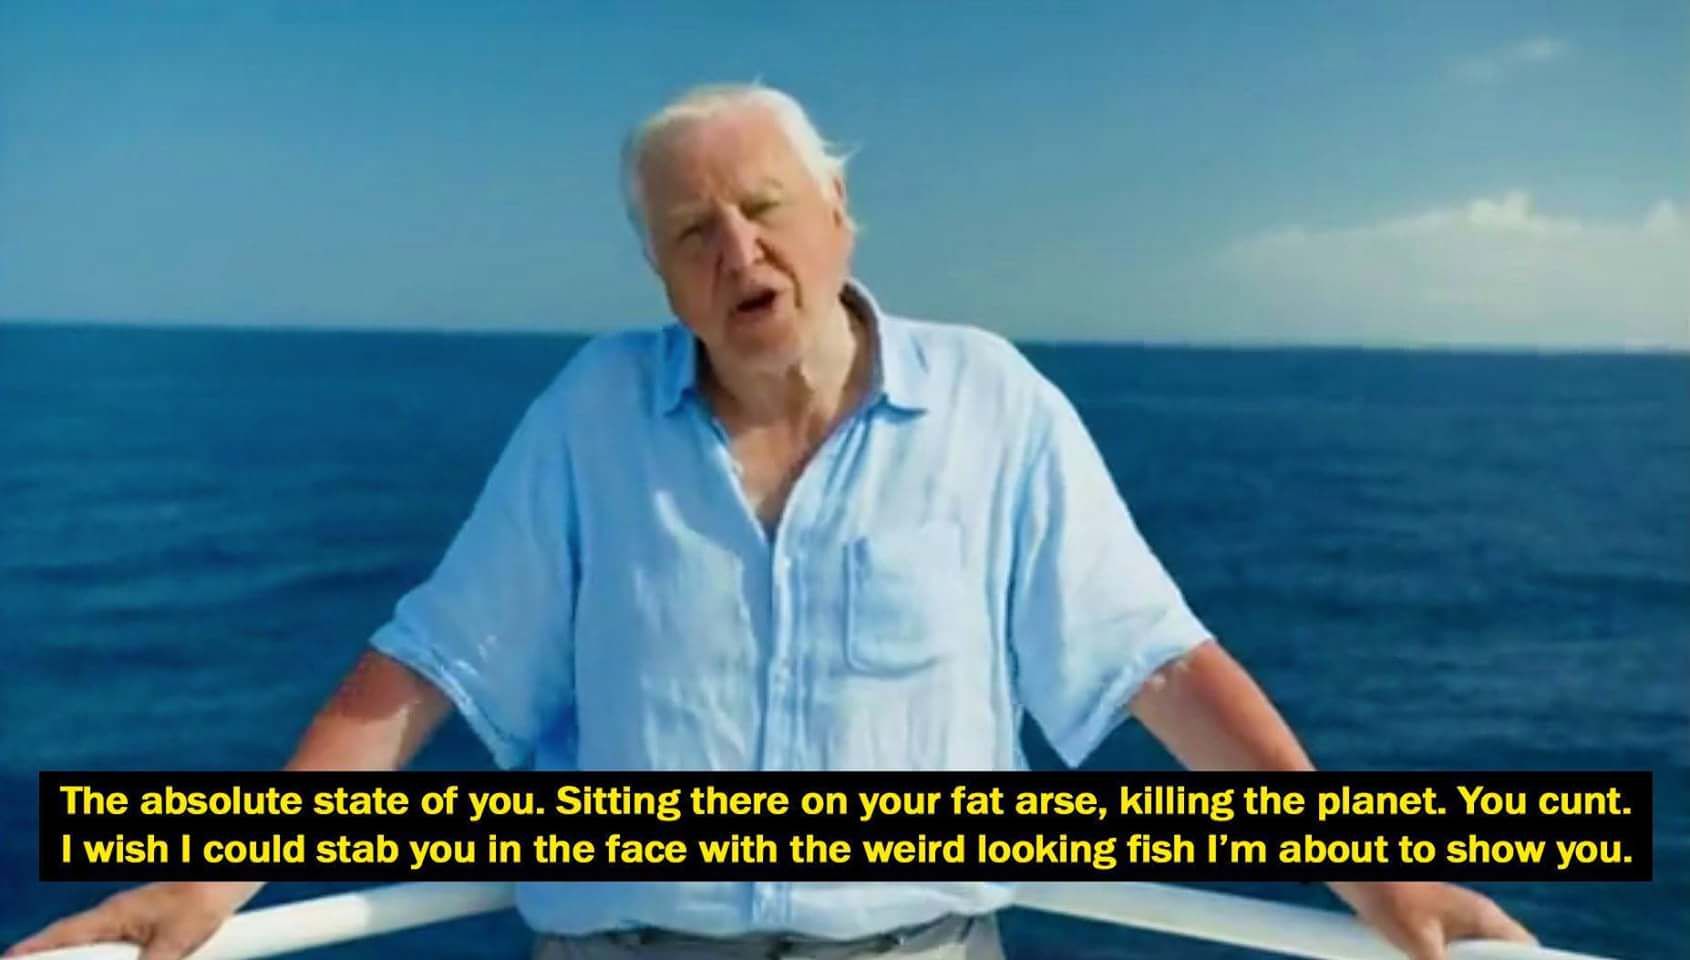 David Attenborough and his words